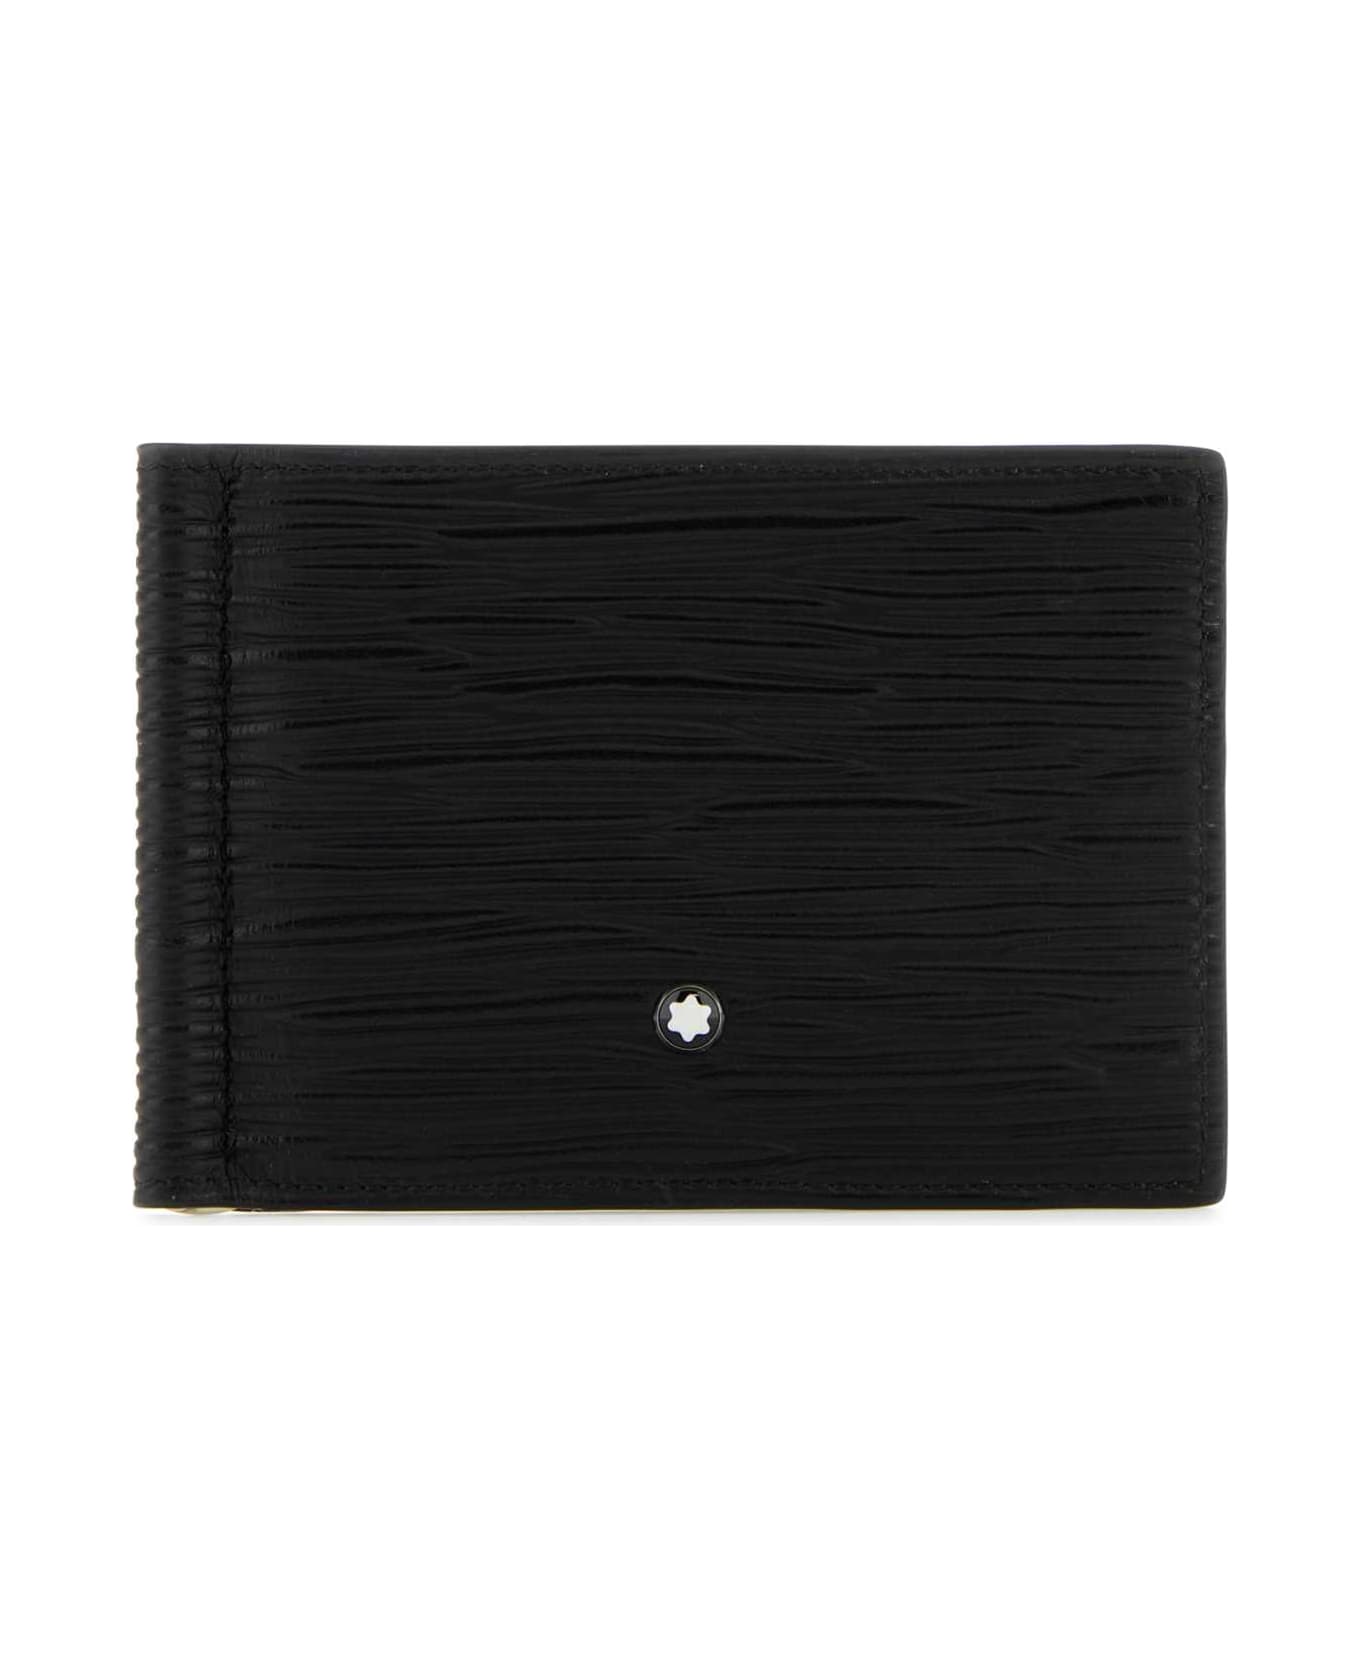 Montblanc Black Leather Wallet - BLACK